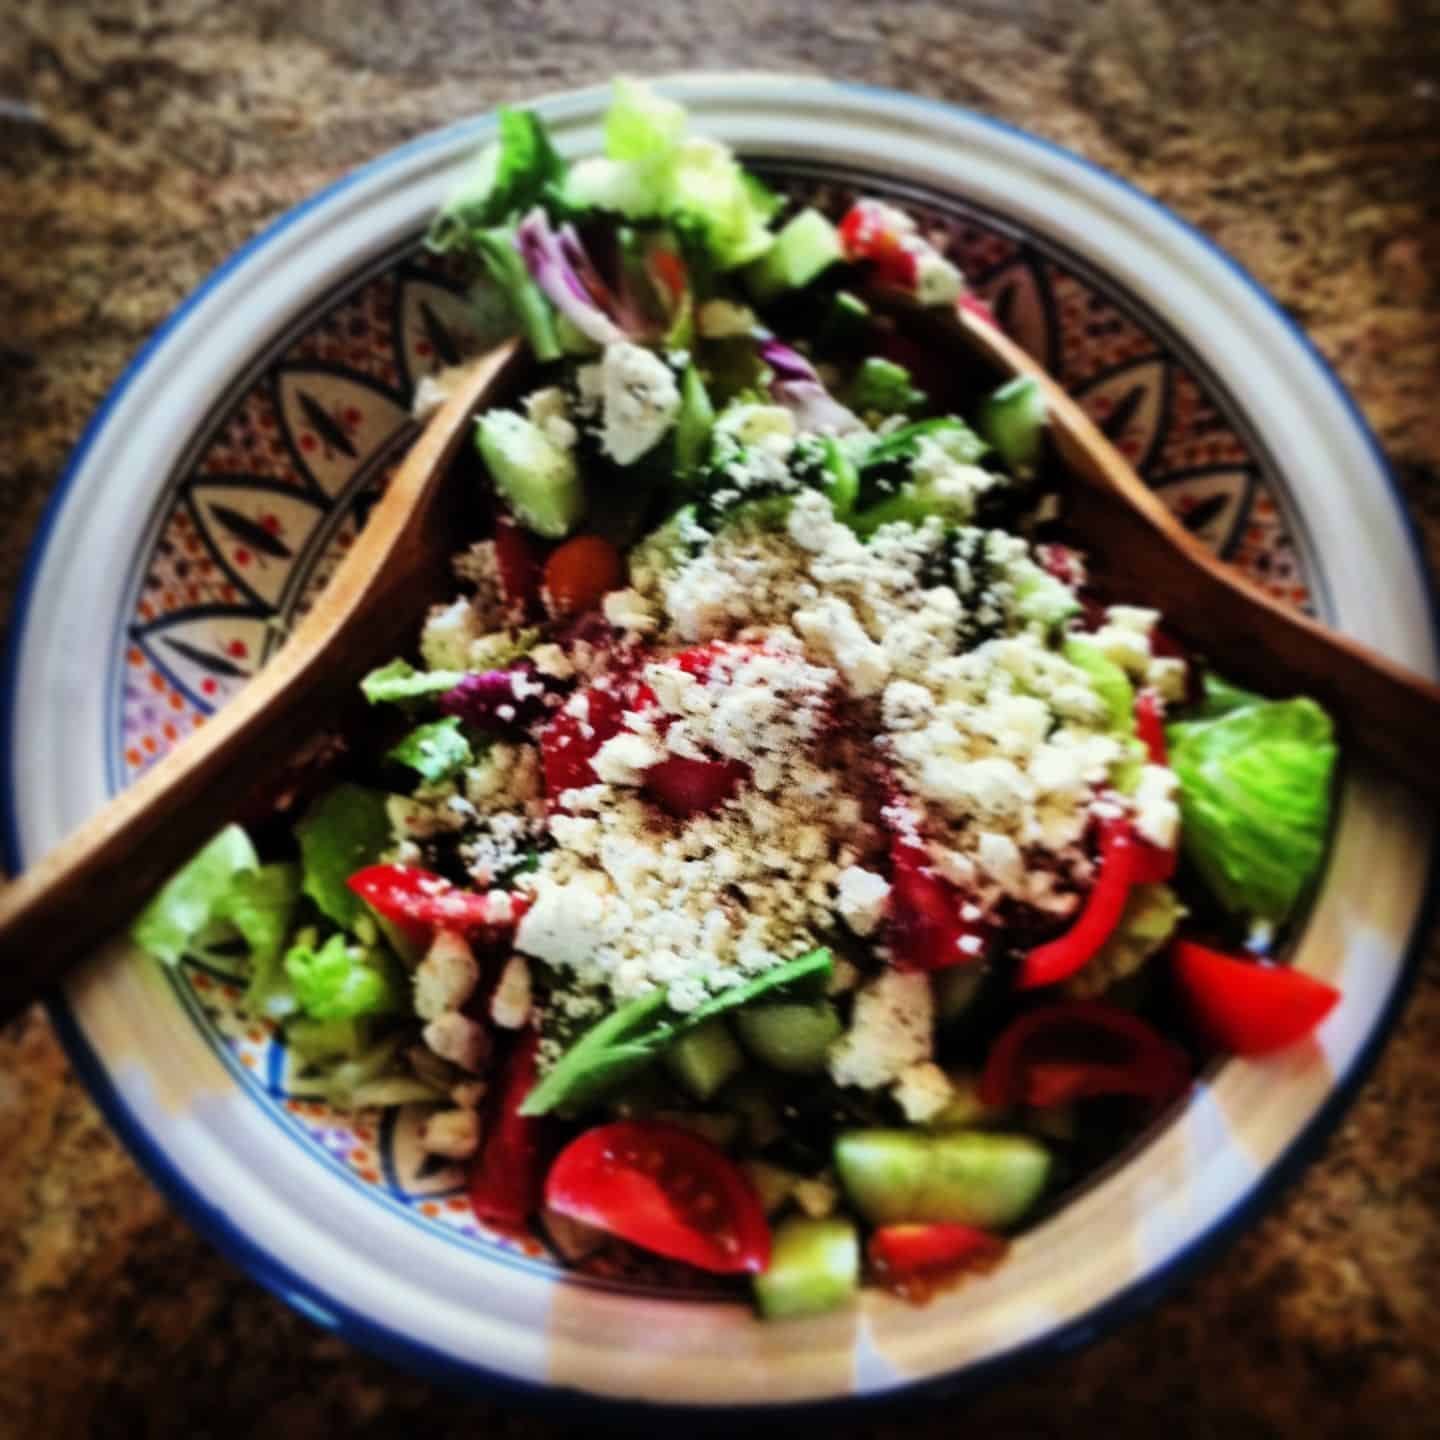 Garden Salad Calories And Carbs